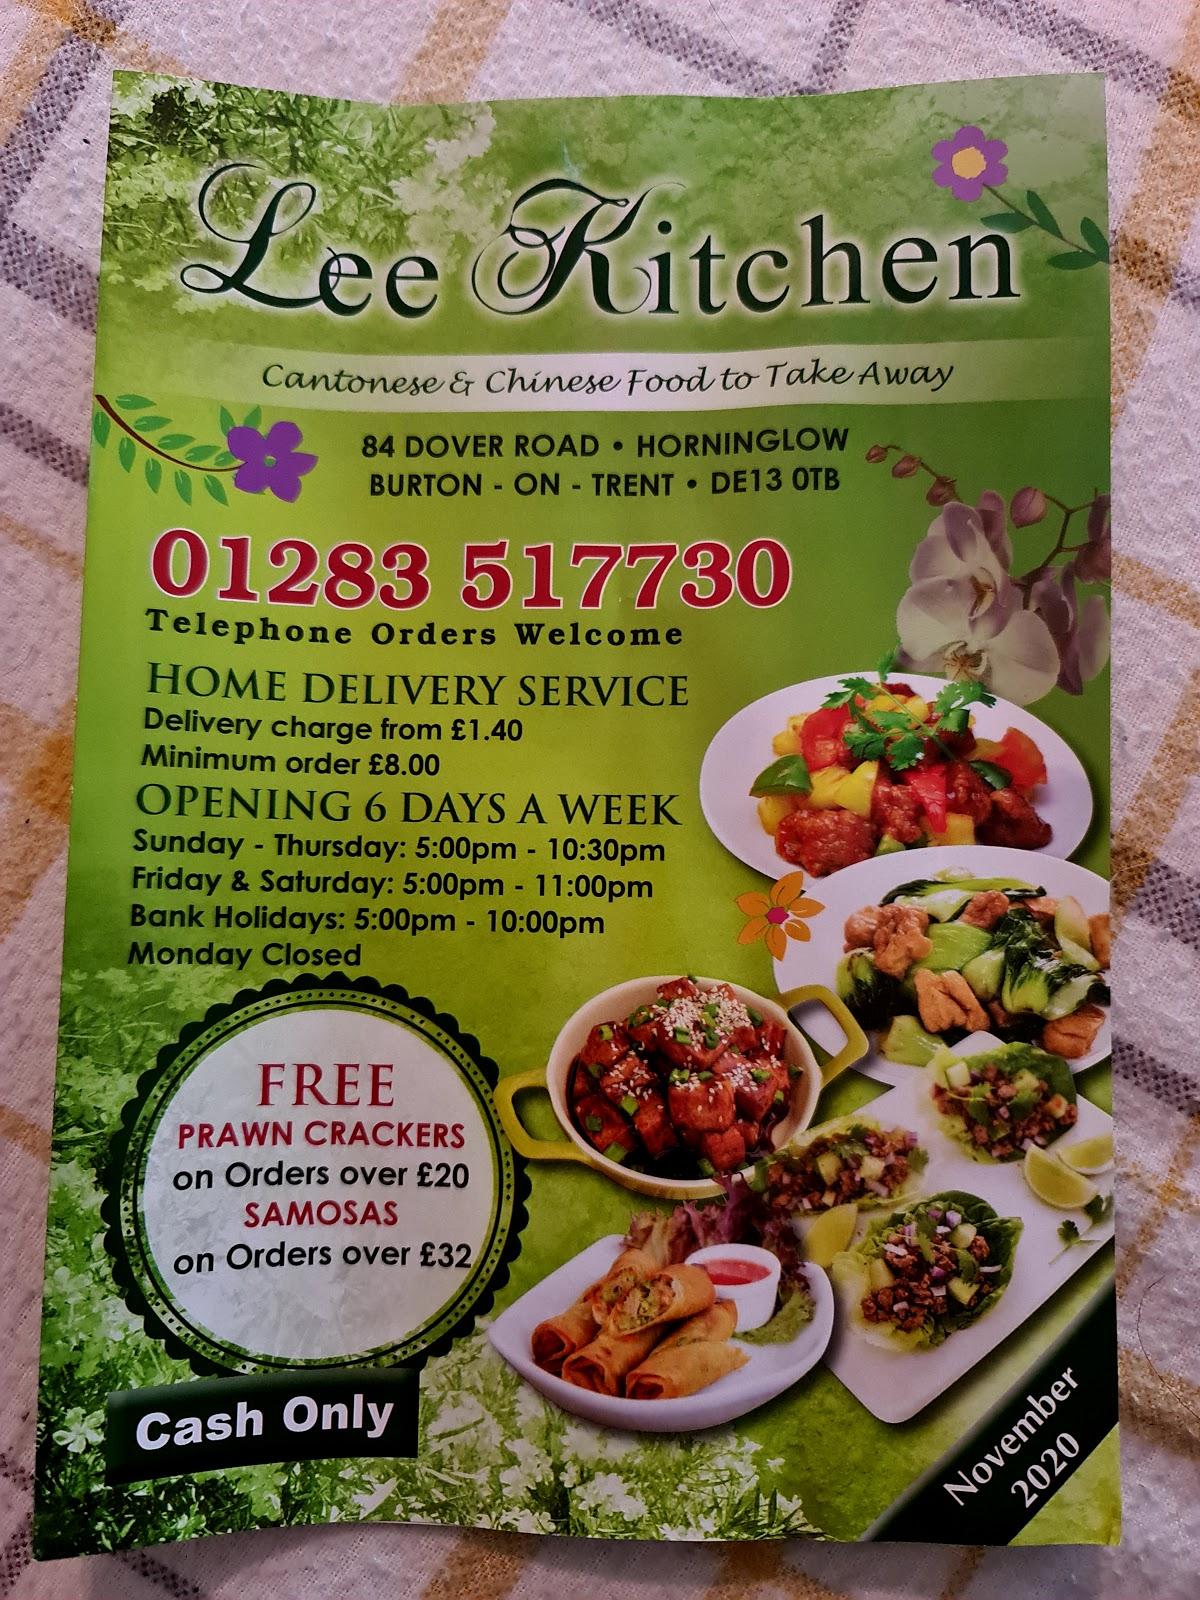 Lee Kitchen in Burton upon Trent - Restaurant reviews